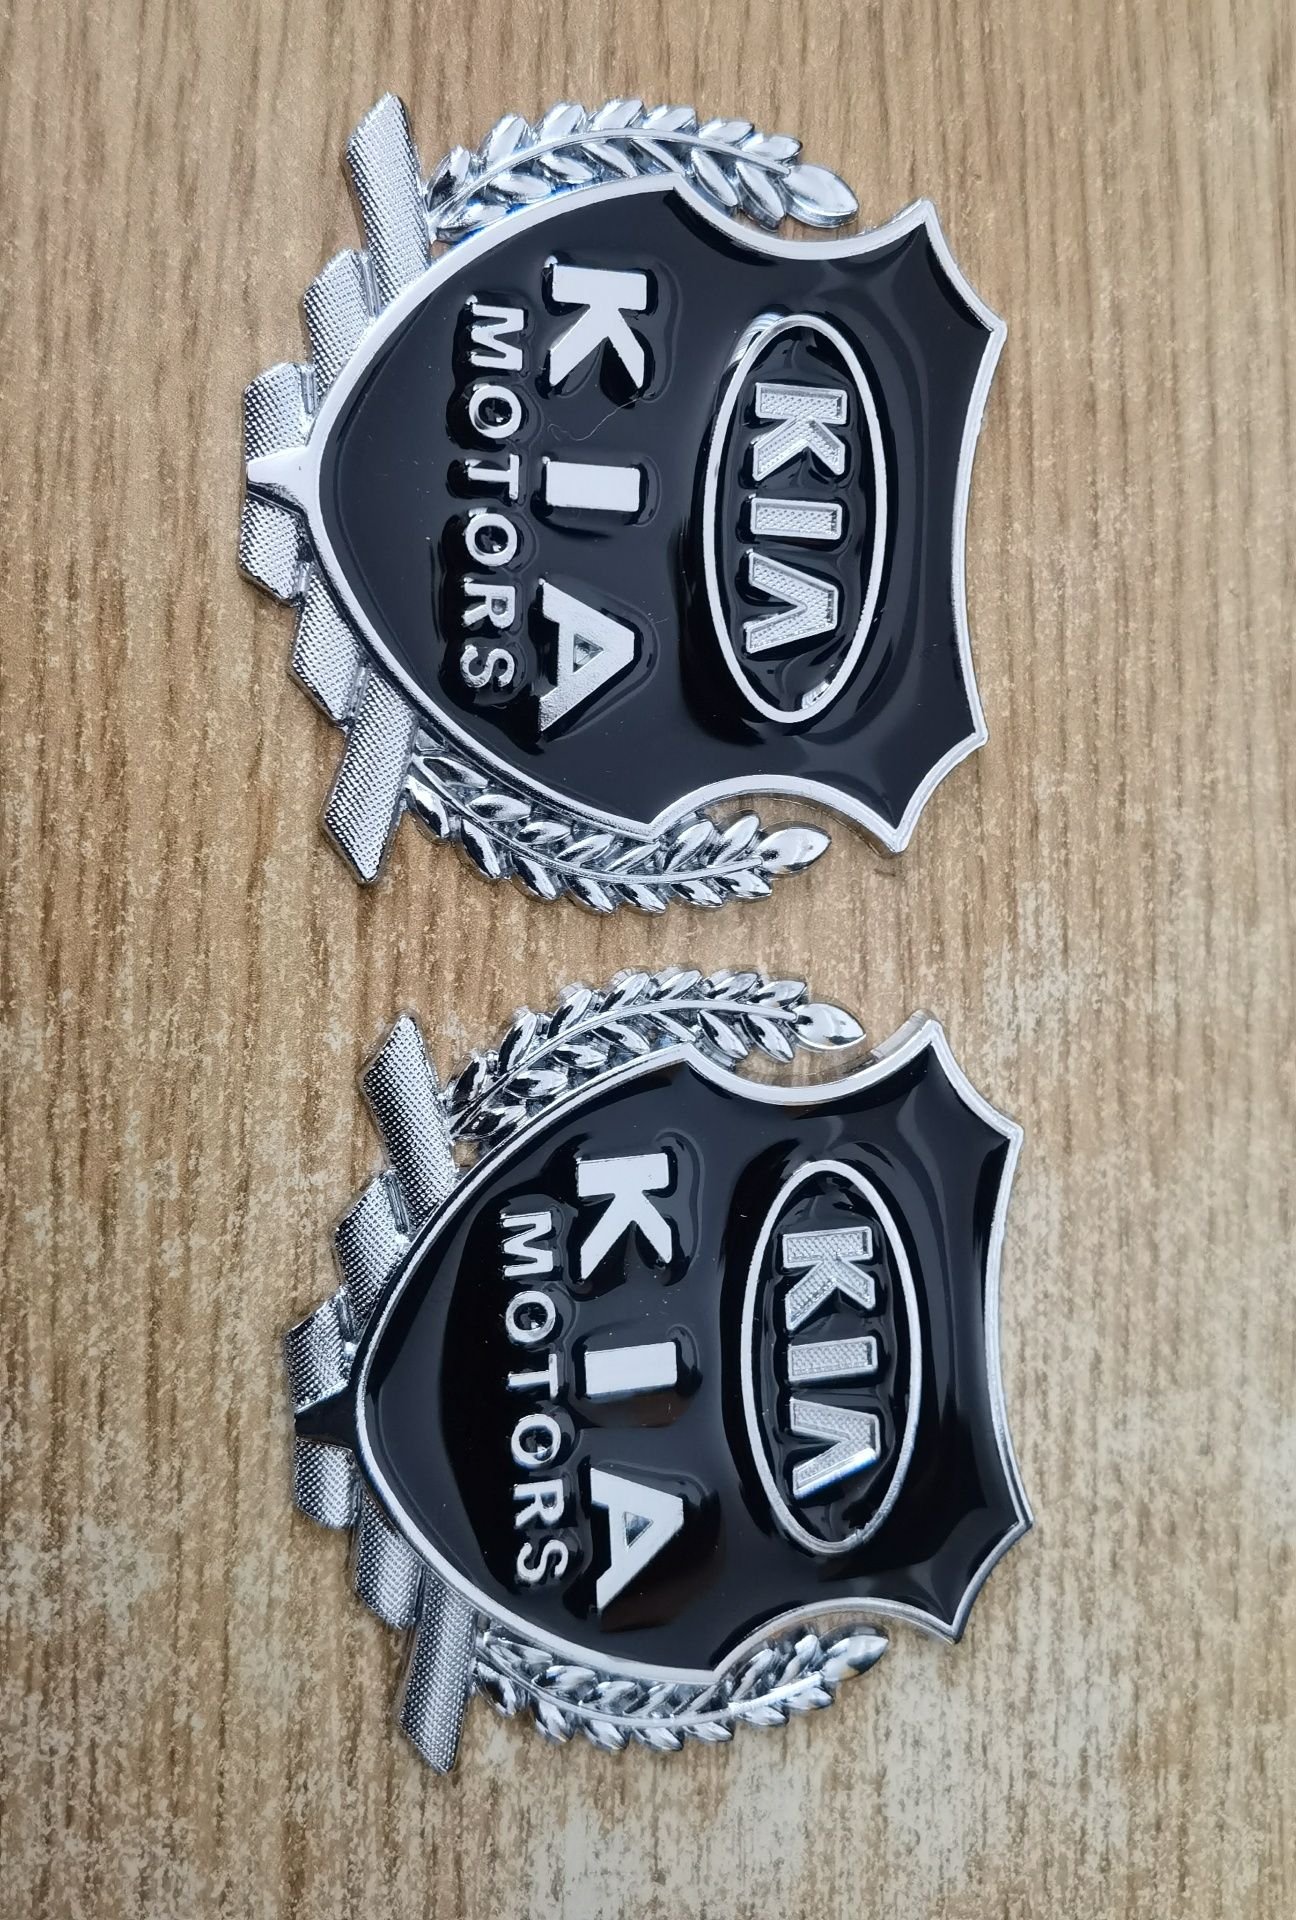 Embleme Kia din metal si plastic